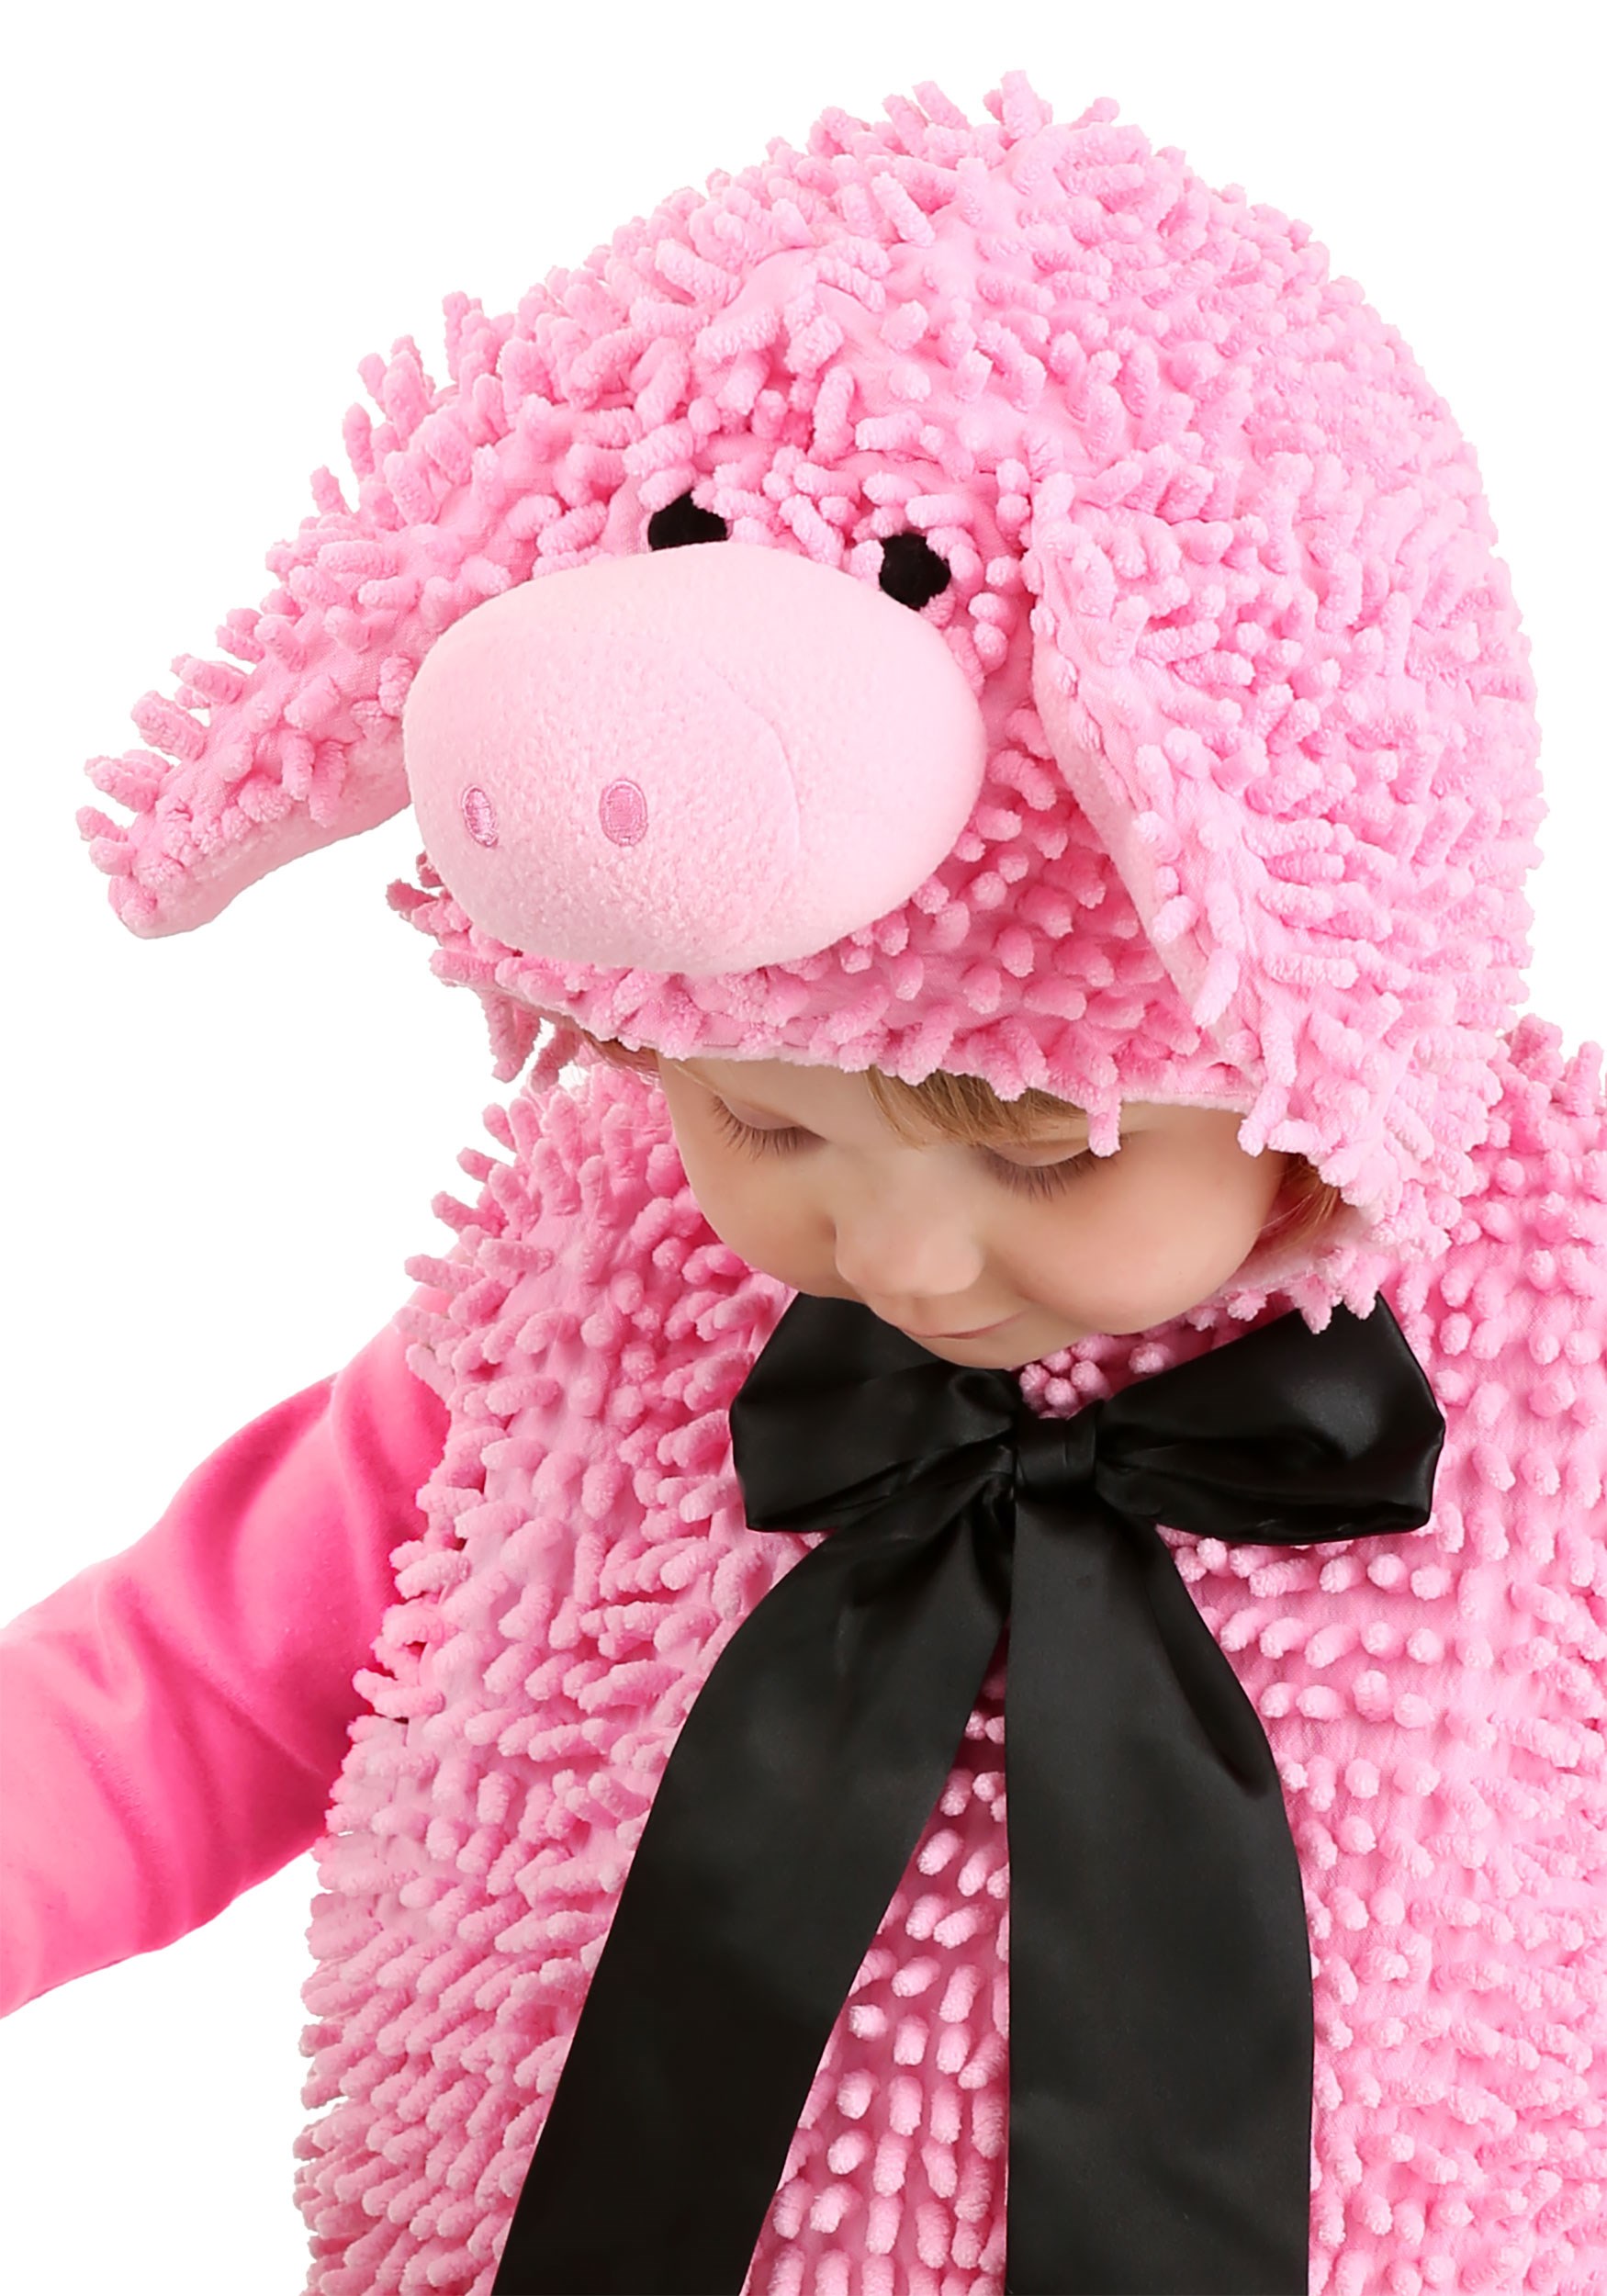 Wiggly Pig Infant Costume